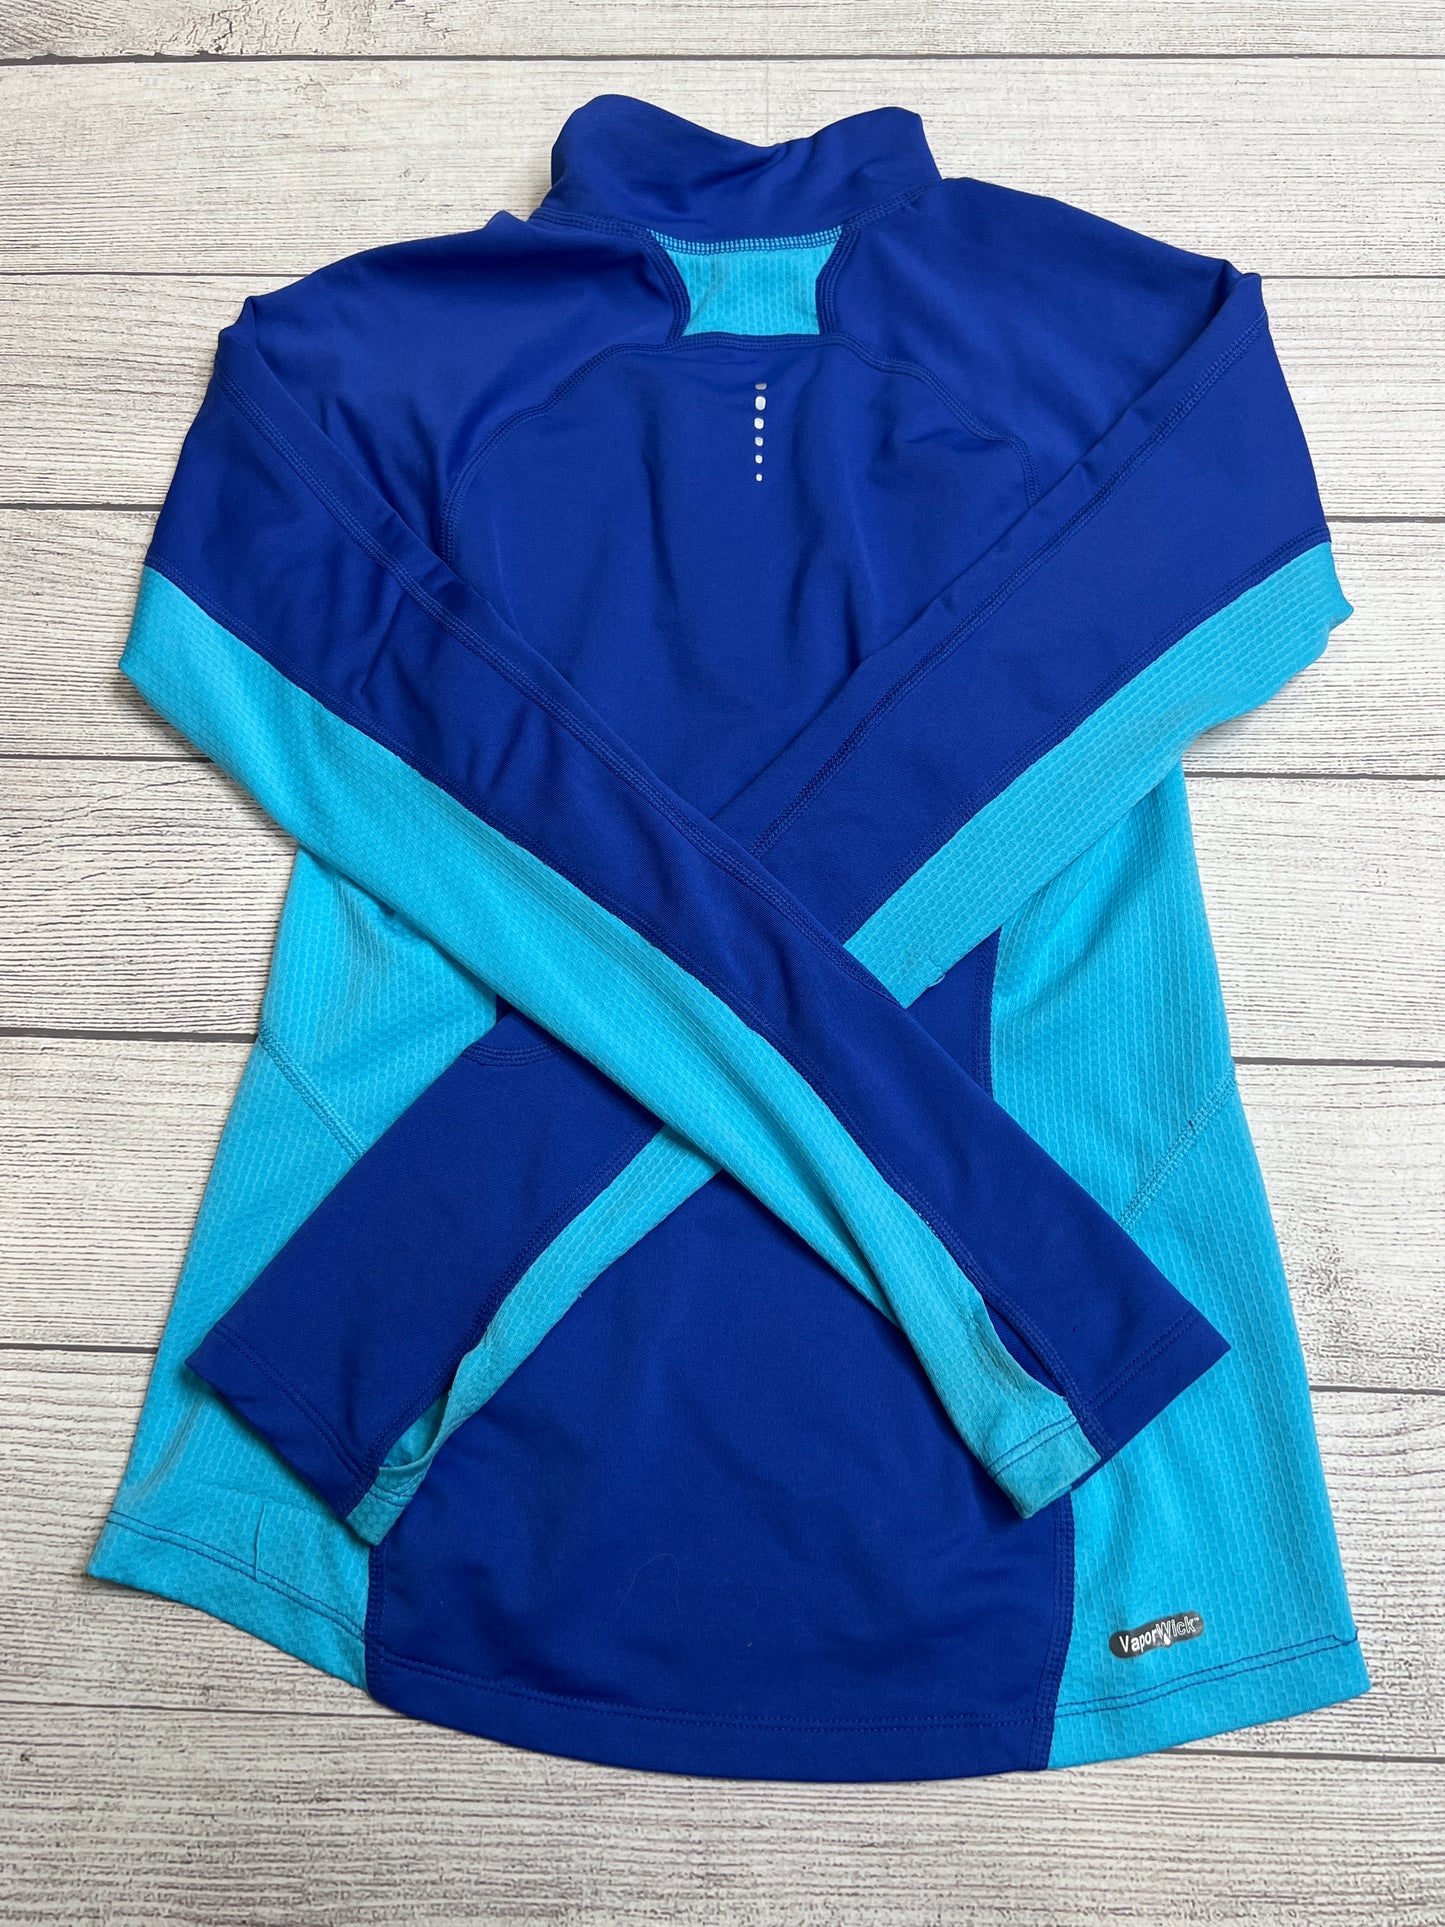 Athletic 1/2 Zip Sweatshirt Crewneck By North Face  Size: Xs